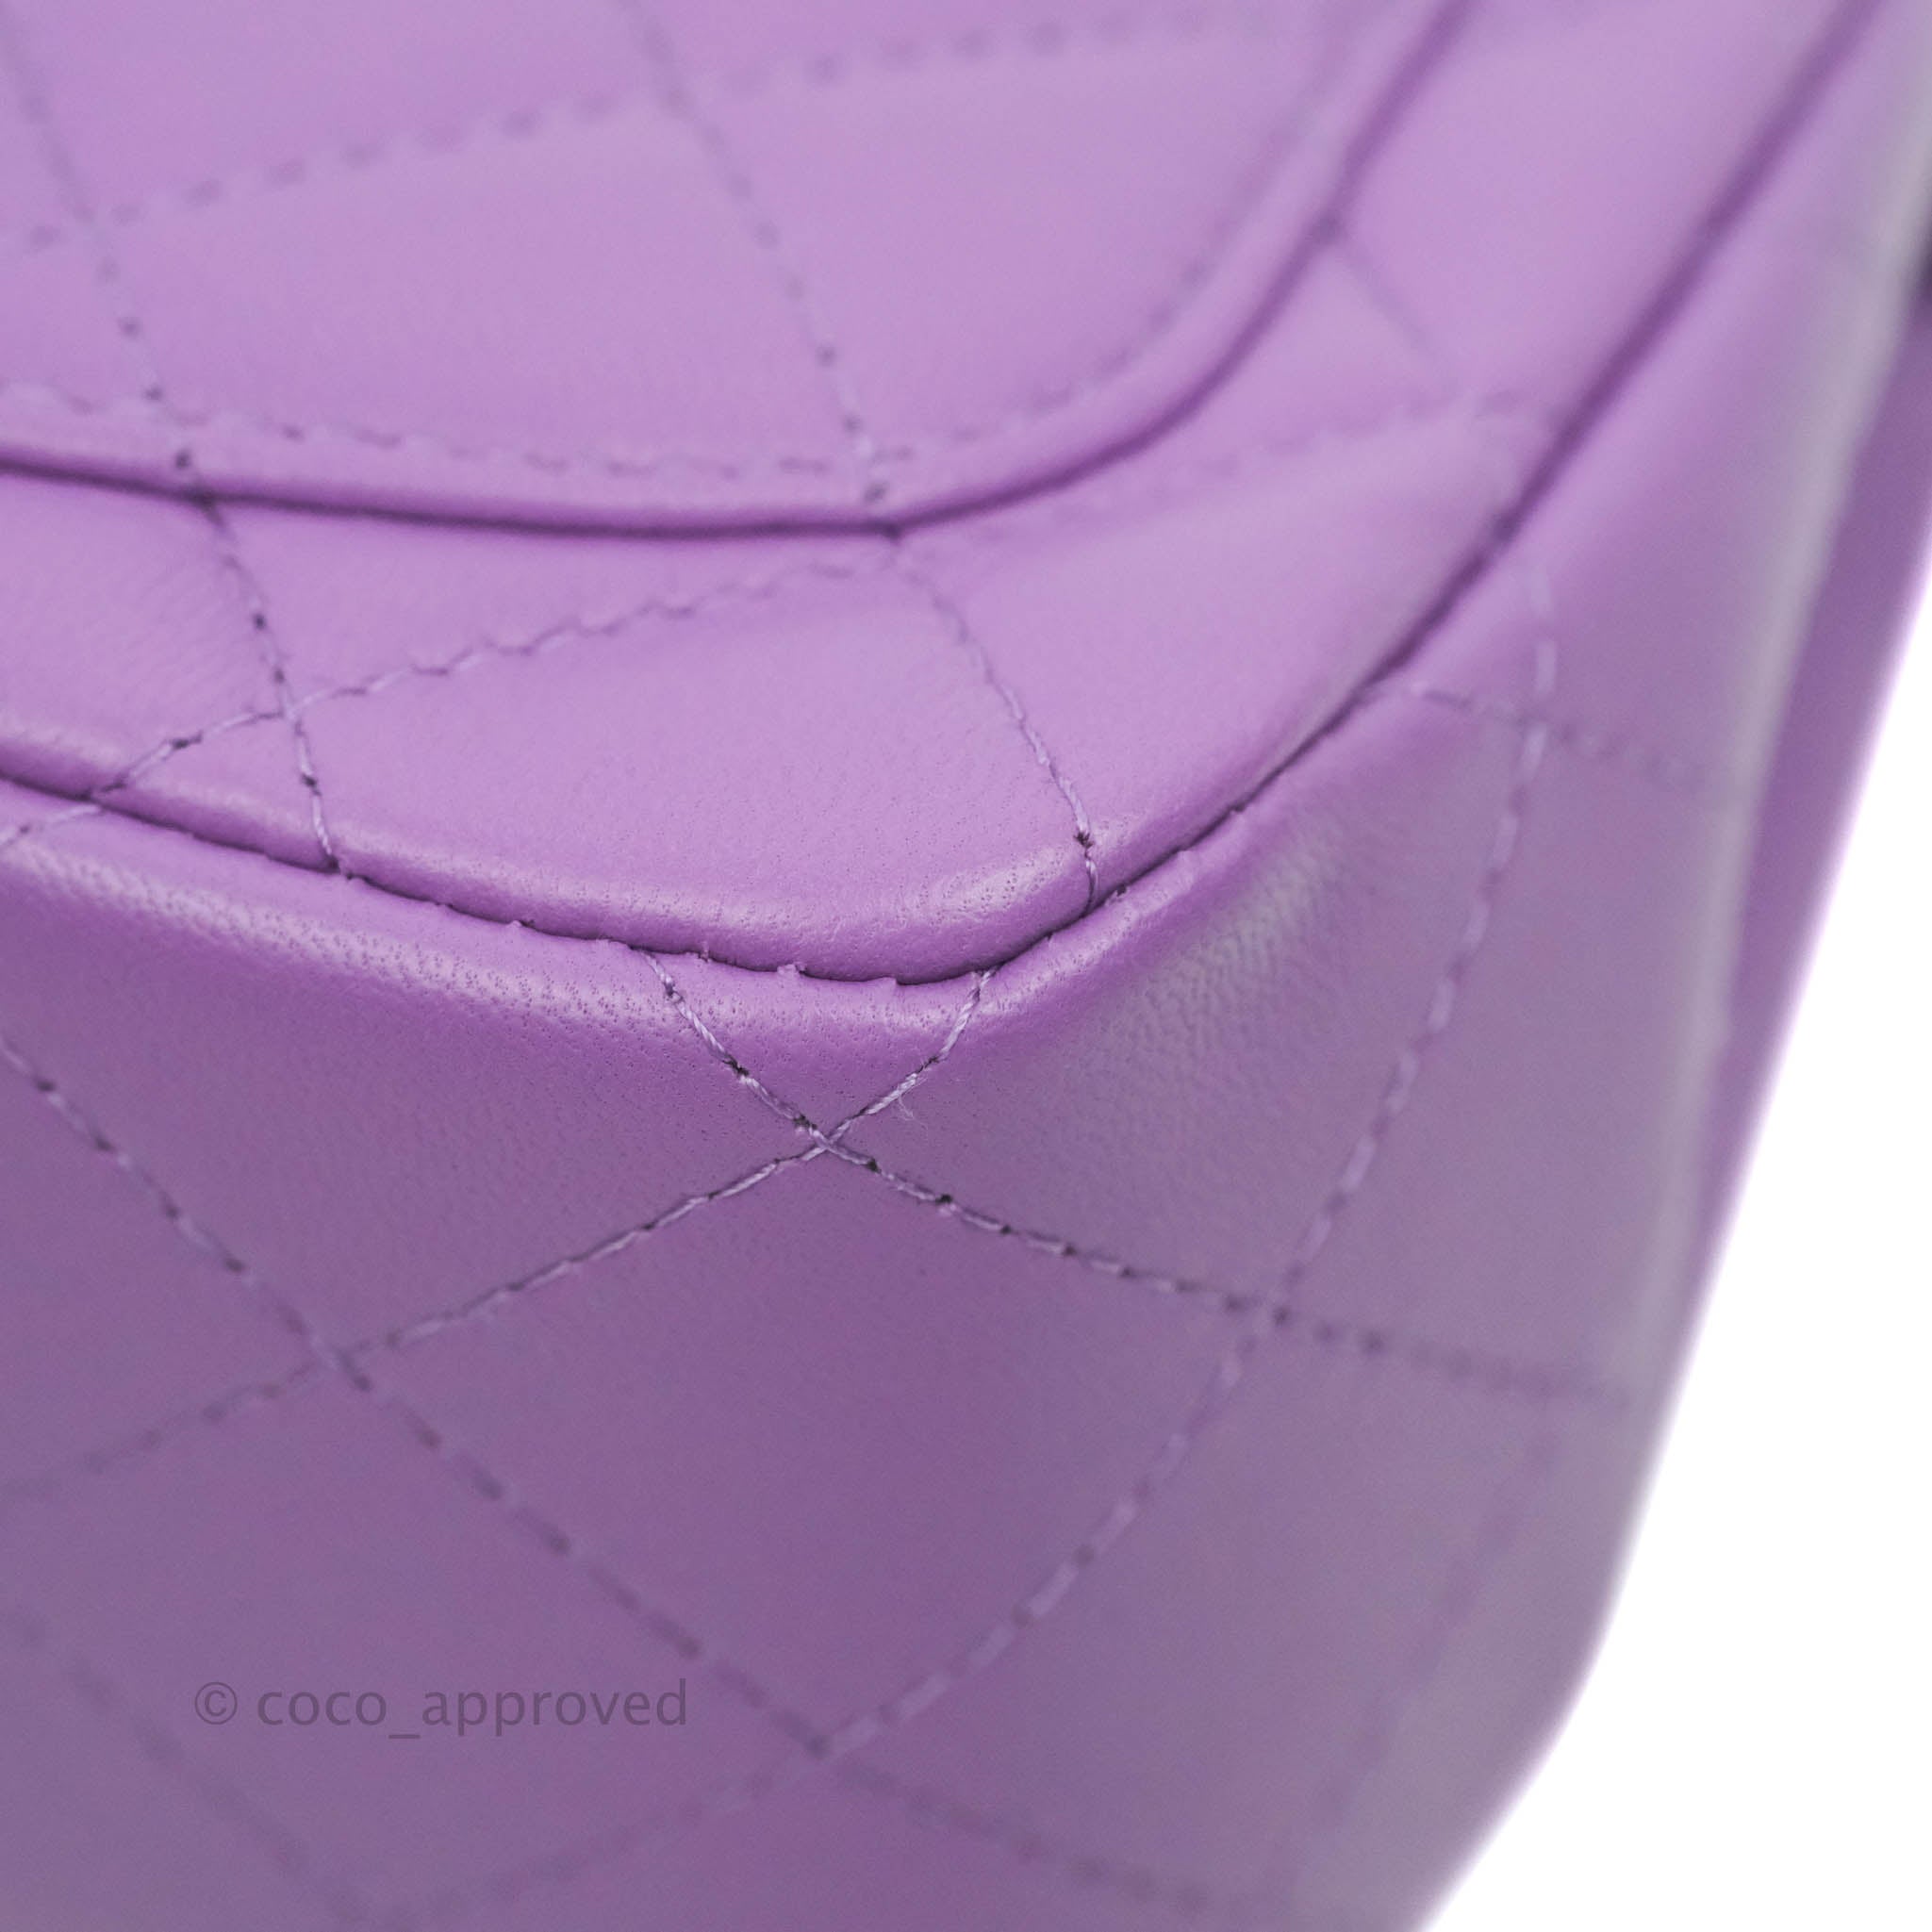 Chanel Lambskin Quilted Mini Rectangular Flap Purple